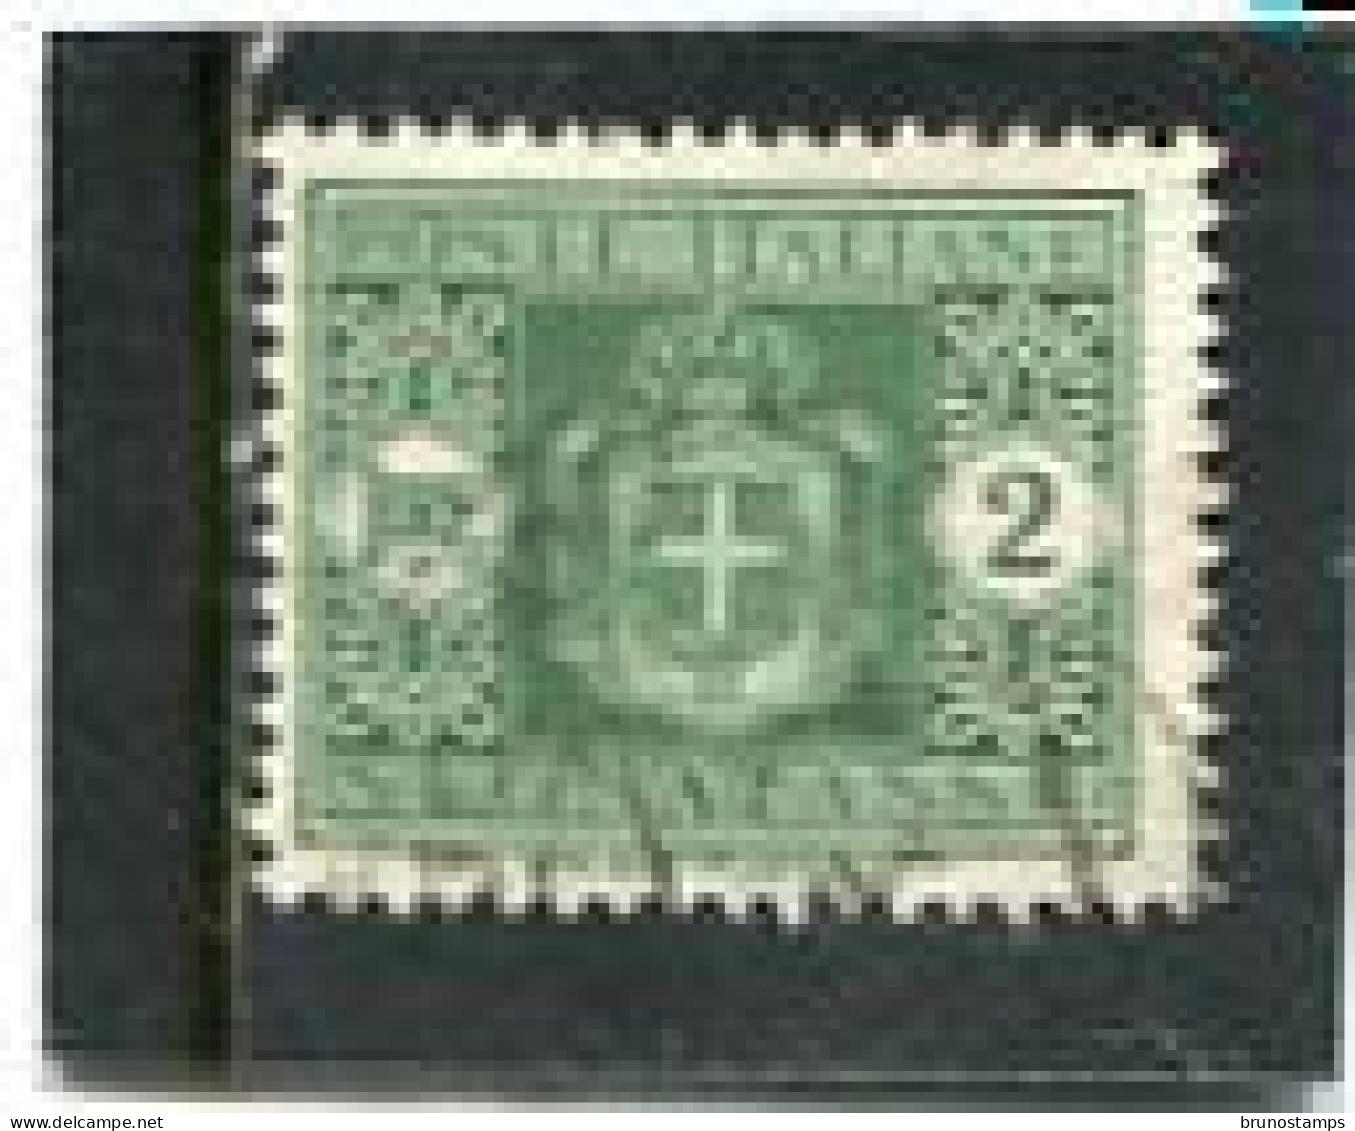 ITALIA - 1945  POSTAGE DUE  2 L  WMK  FINE USED - Portomarken